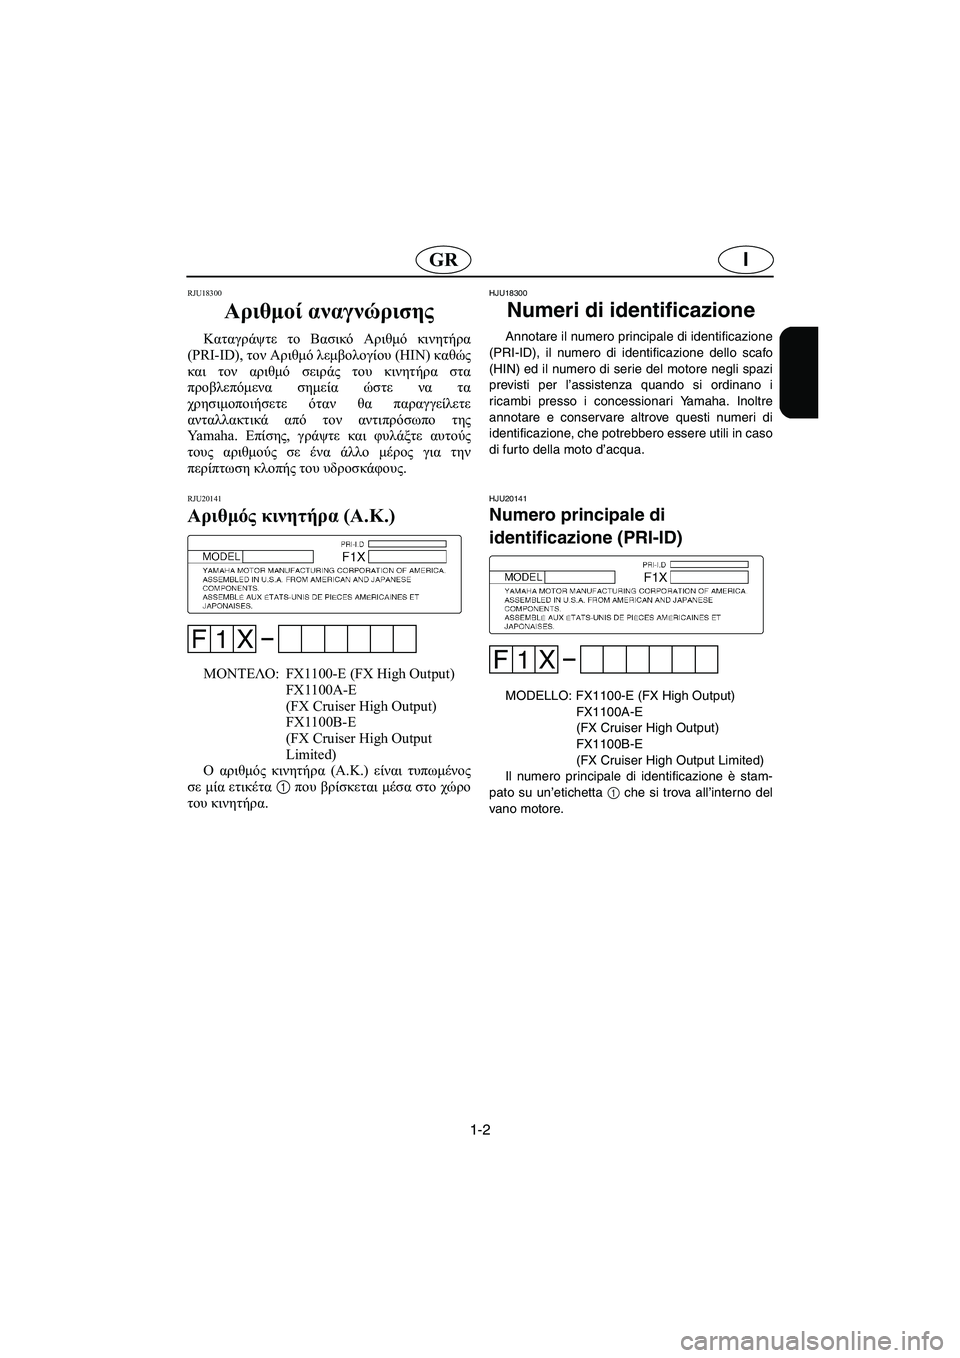 YAMAHA FX HO CRUISER 2006  Manuale duso (in Italian) 1-2
IGR
RJU18300 
Αριθμοί αναγνώρισης  
Καταγράψτε το Βασικό Αριθμό κινητήρα
(PRI-ID), τον Αριθμό λεμβολογίου (HIN) καθώς
κ�